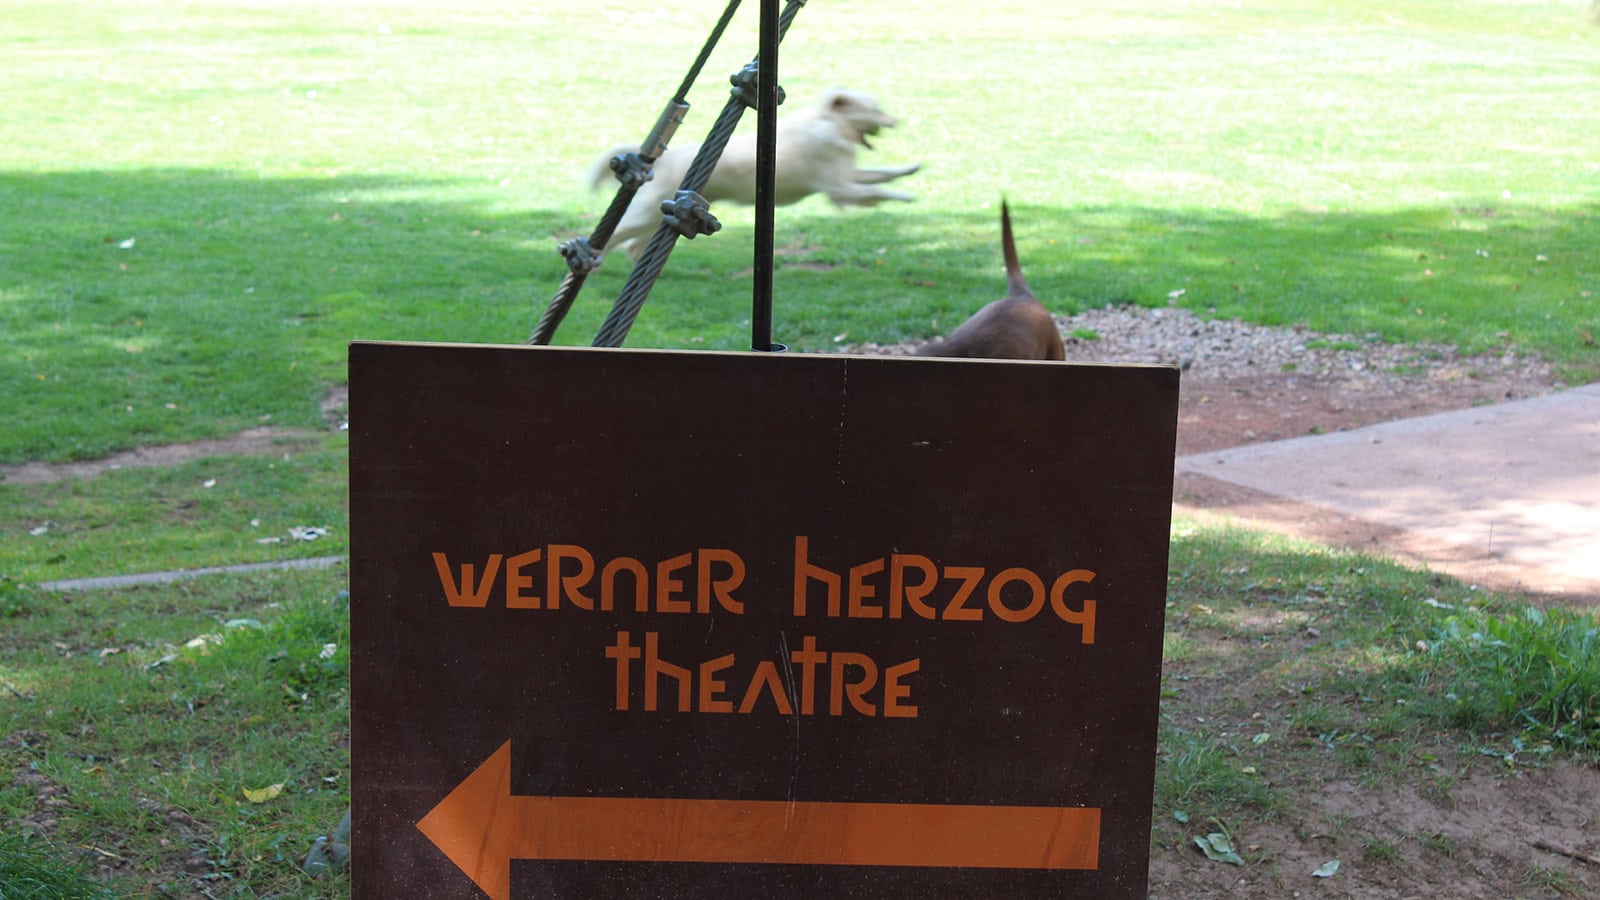 Meyer Sound Returns to Telluride Film Festival’s Famed Werner Herzog Theater